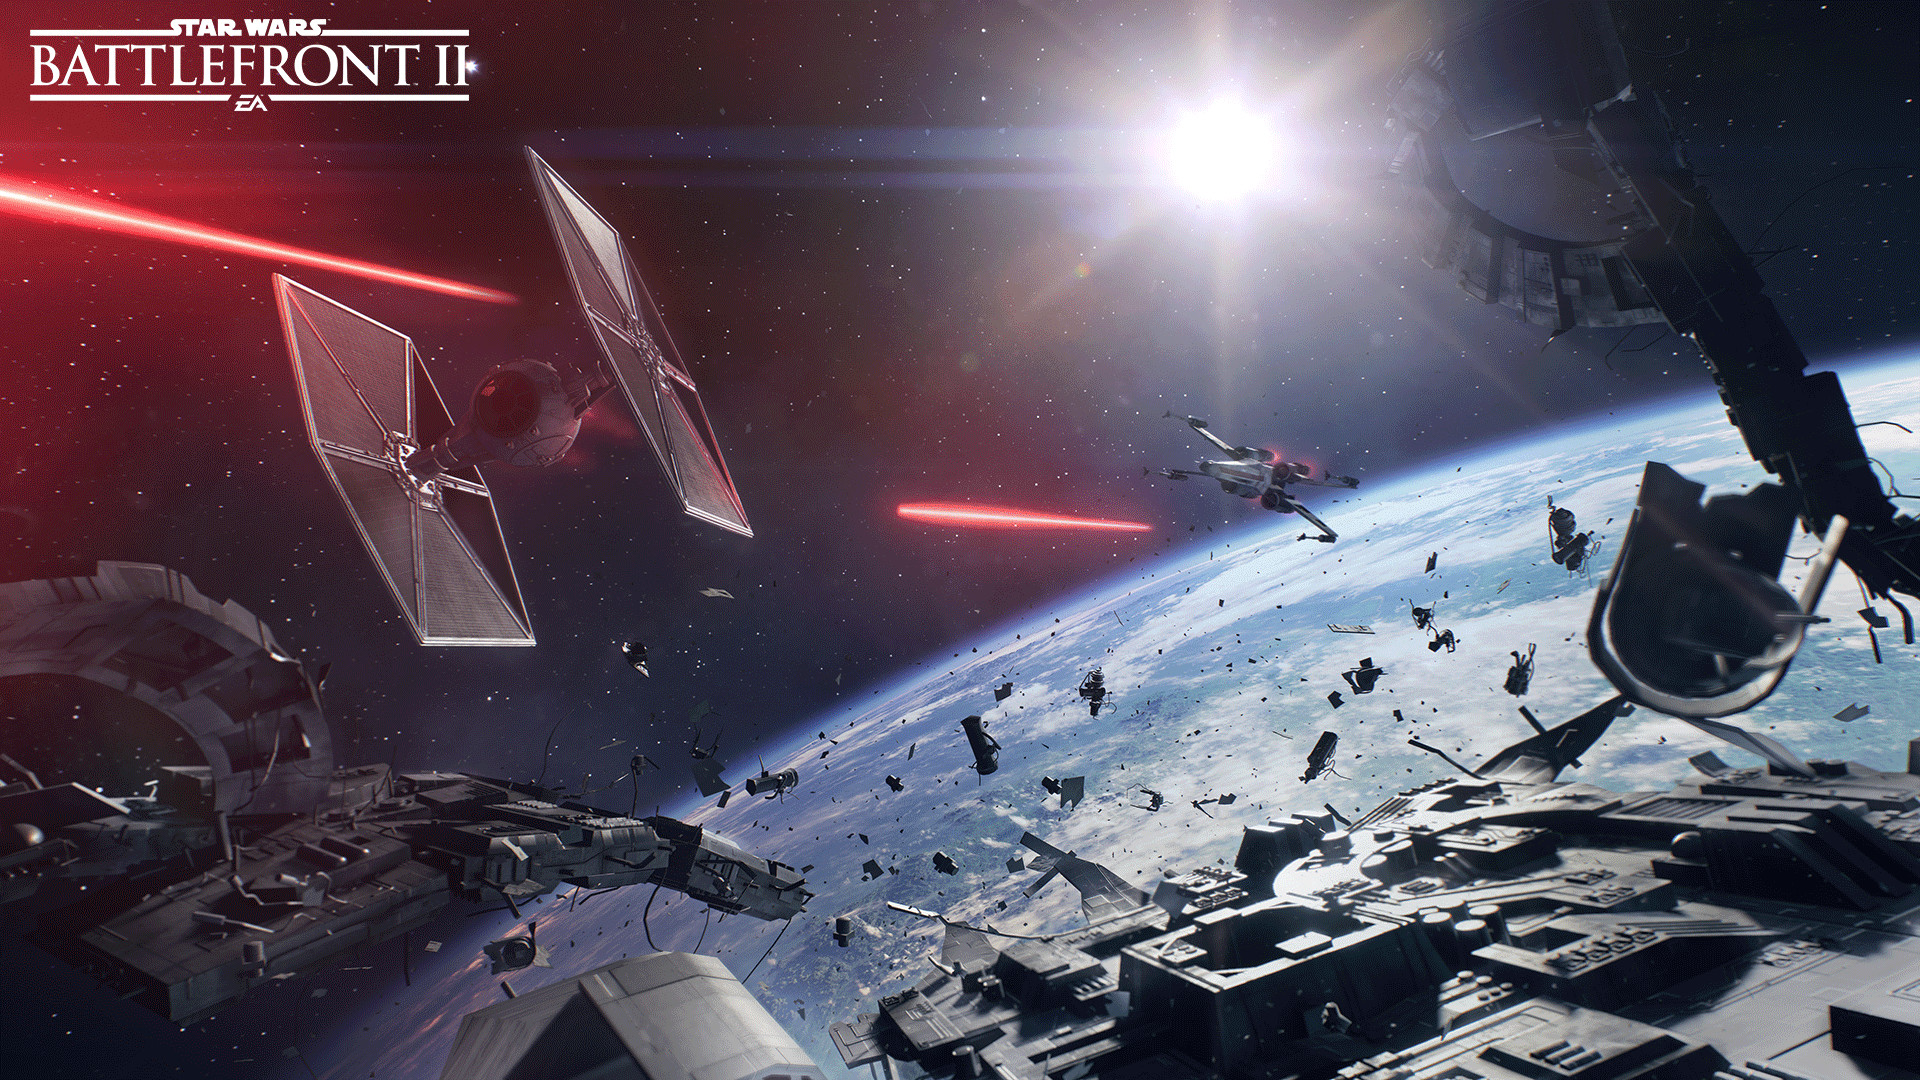 Star Wars: Battlefront II screenshot 10613